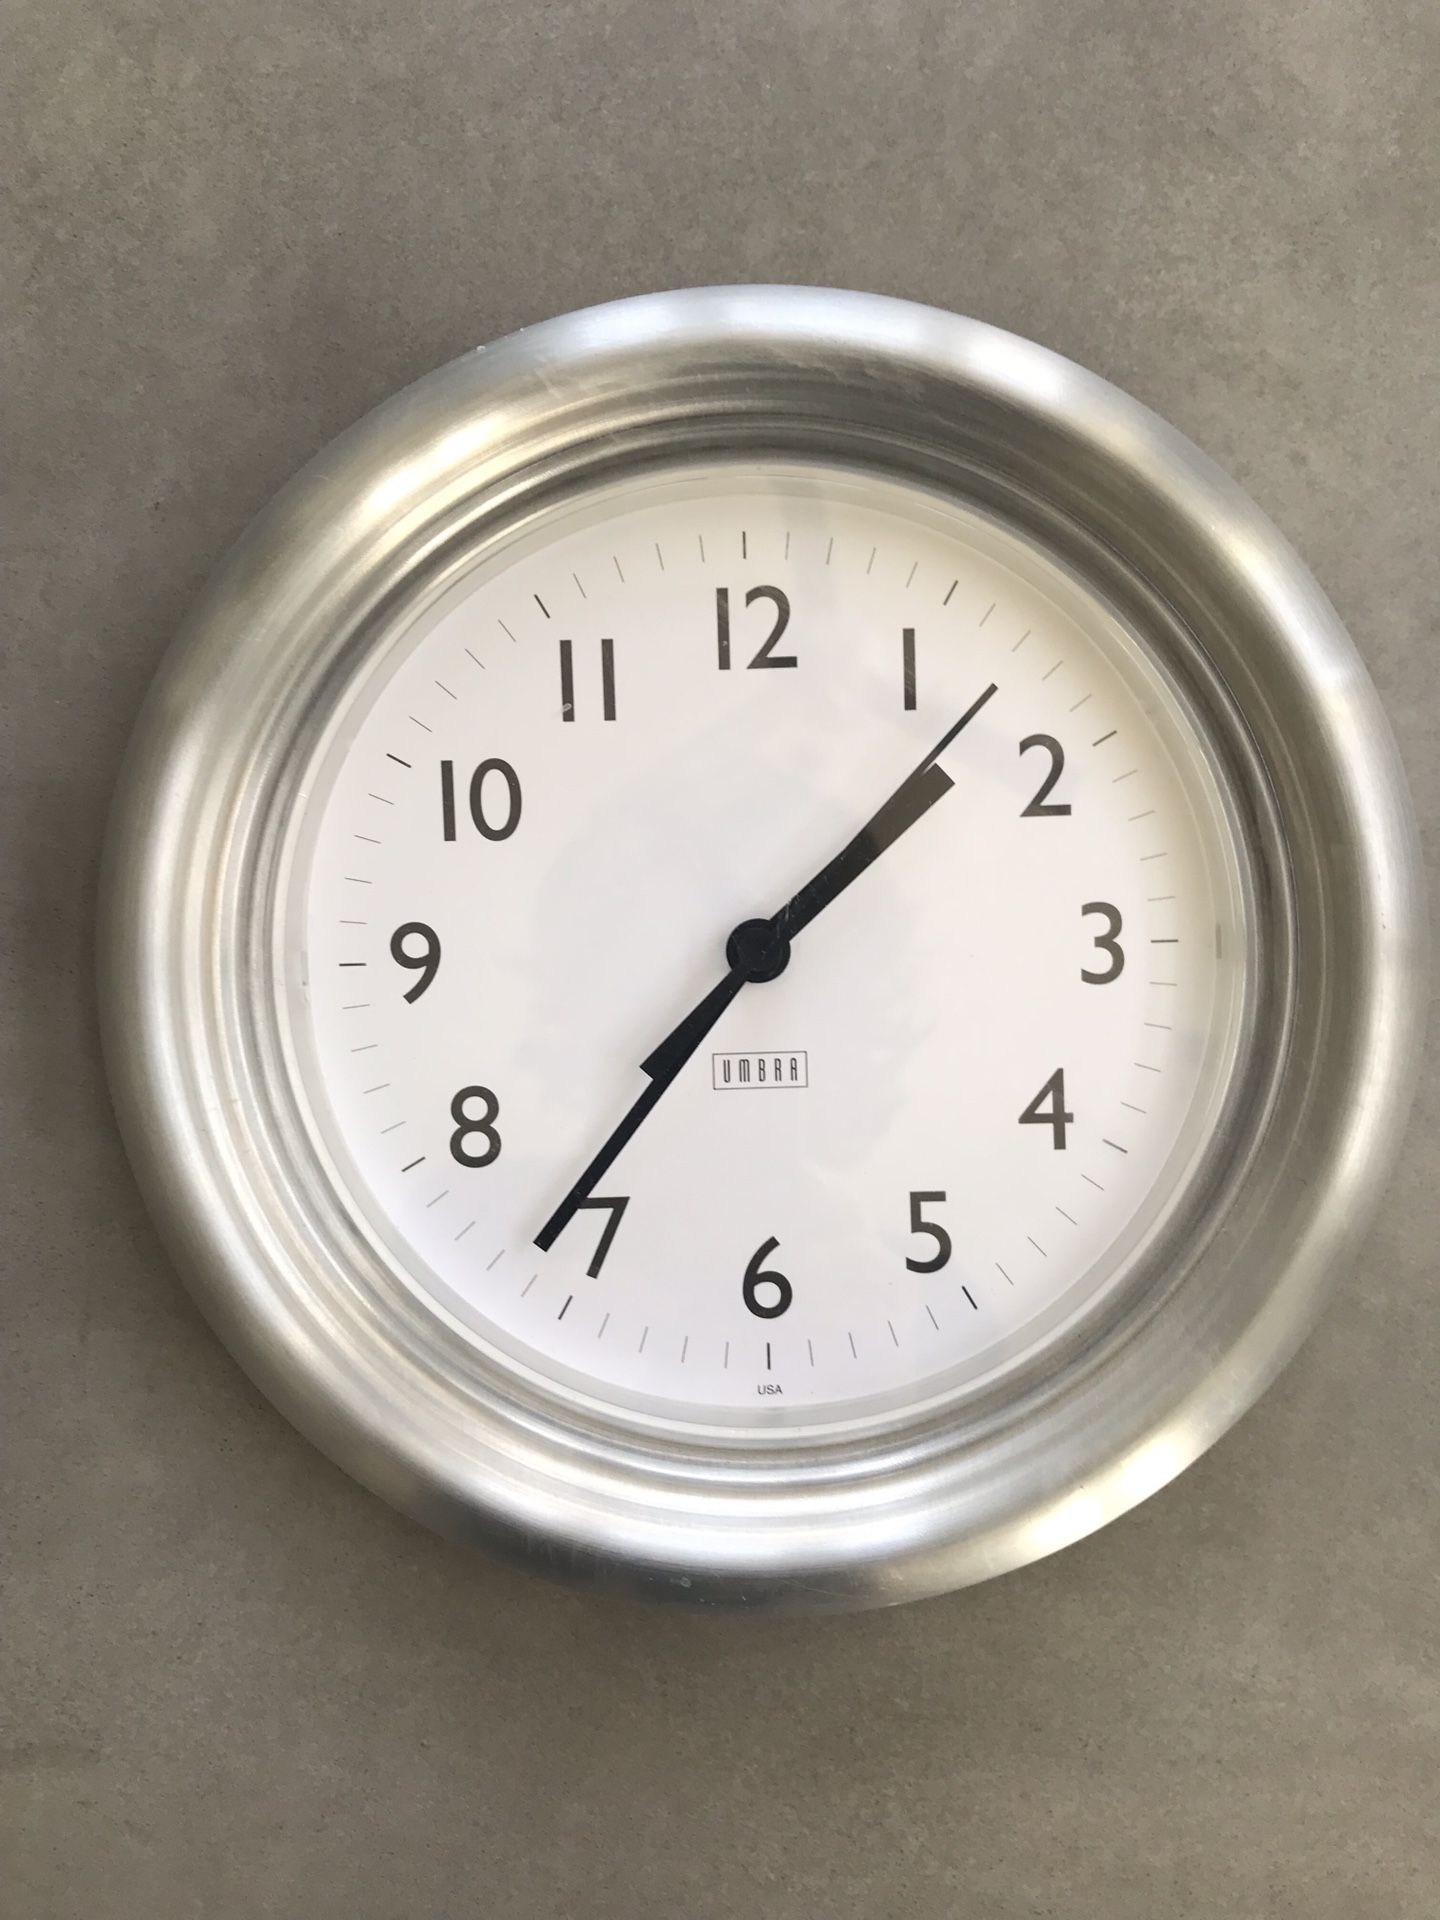 Wall clock - working, 9.5 inch diameter